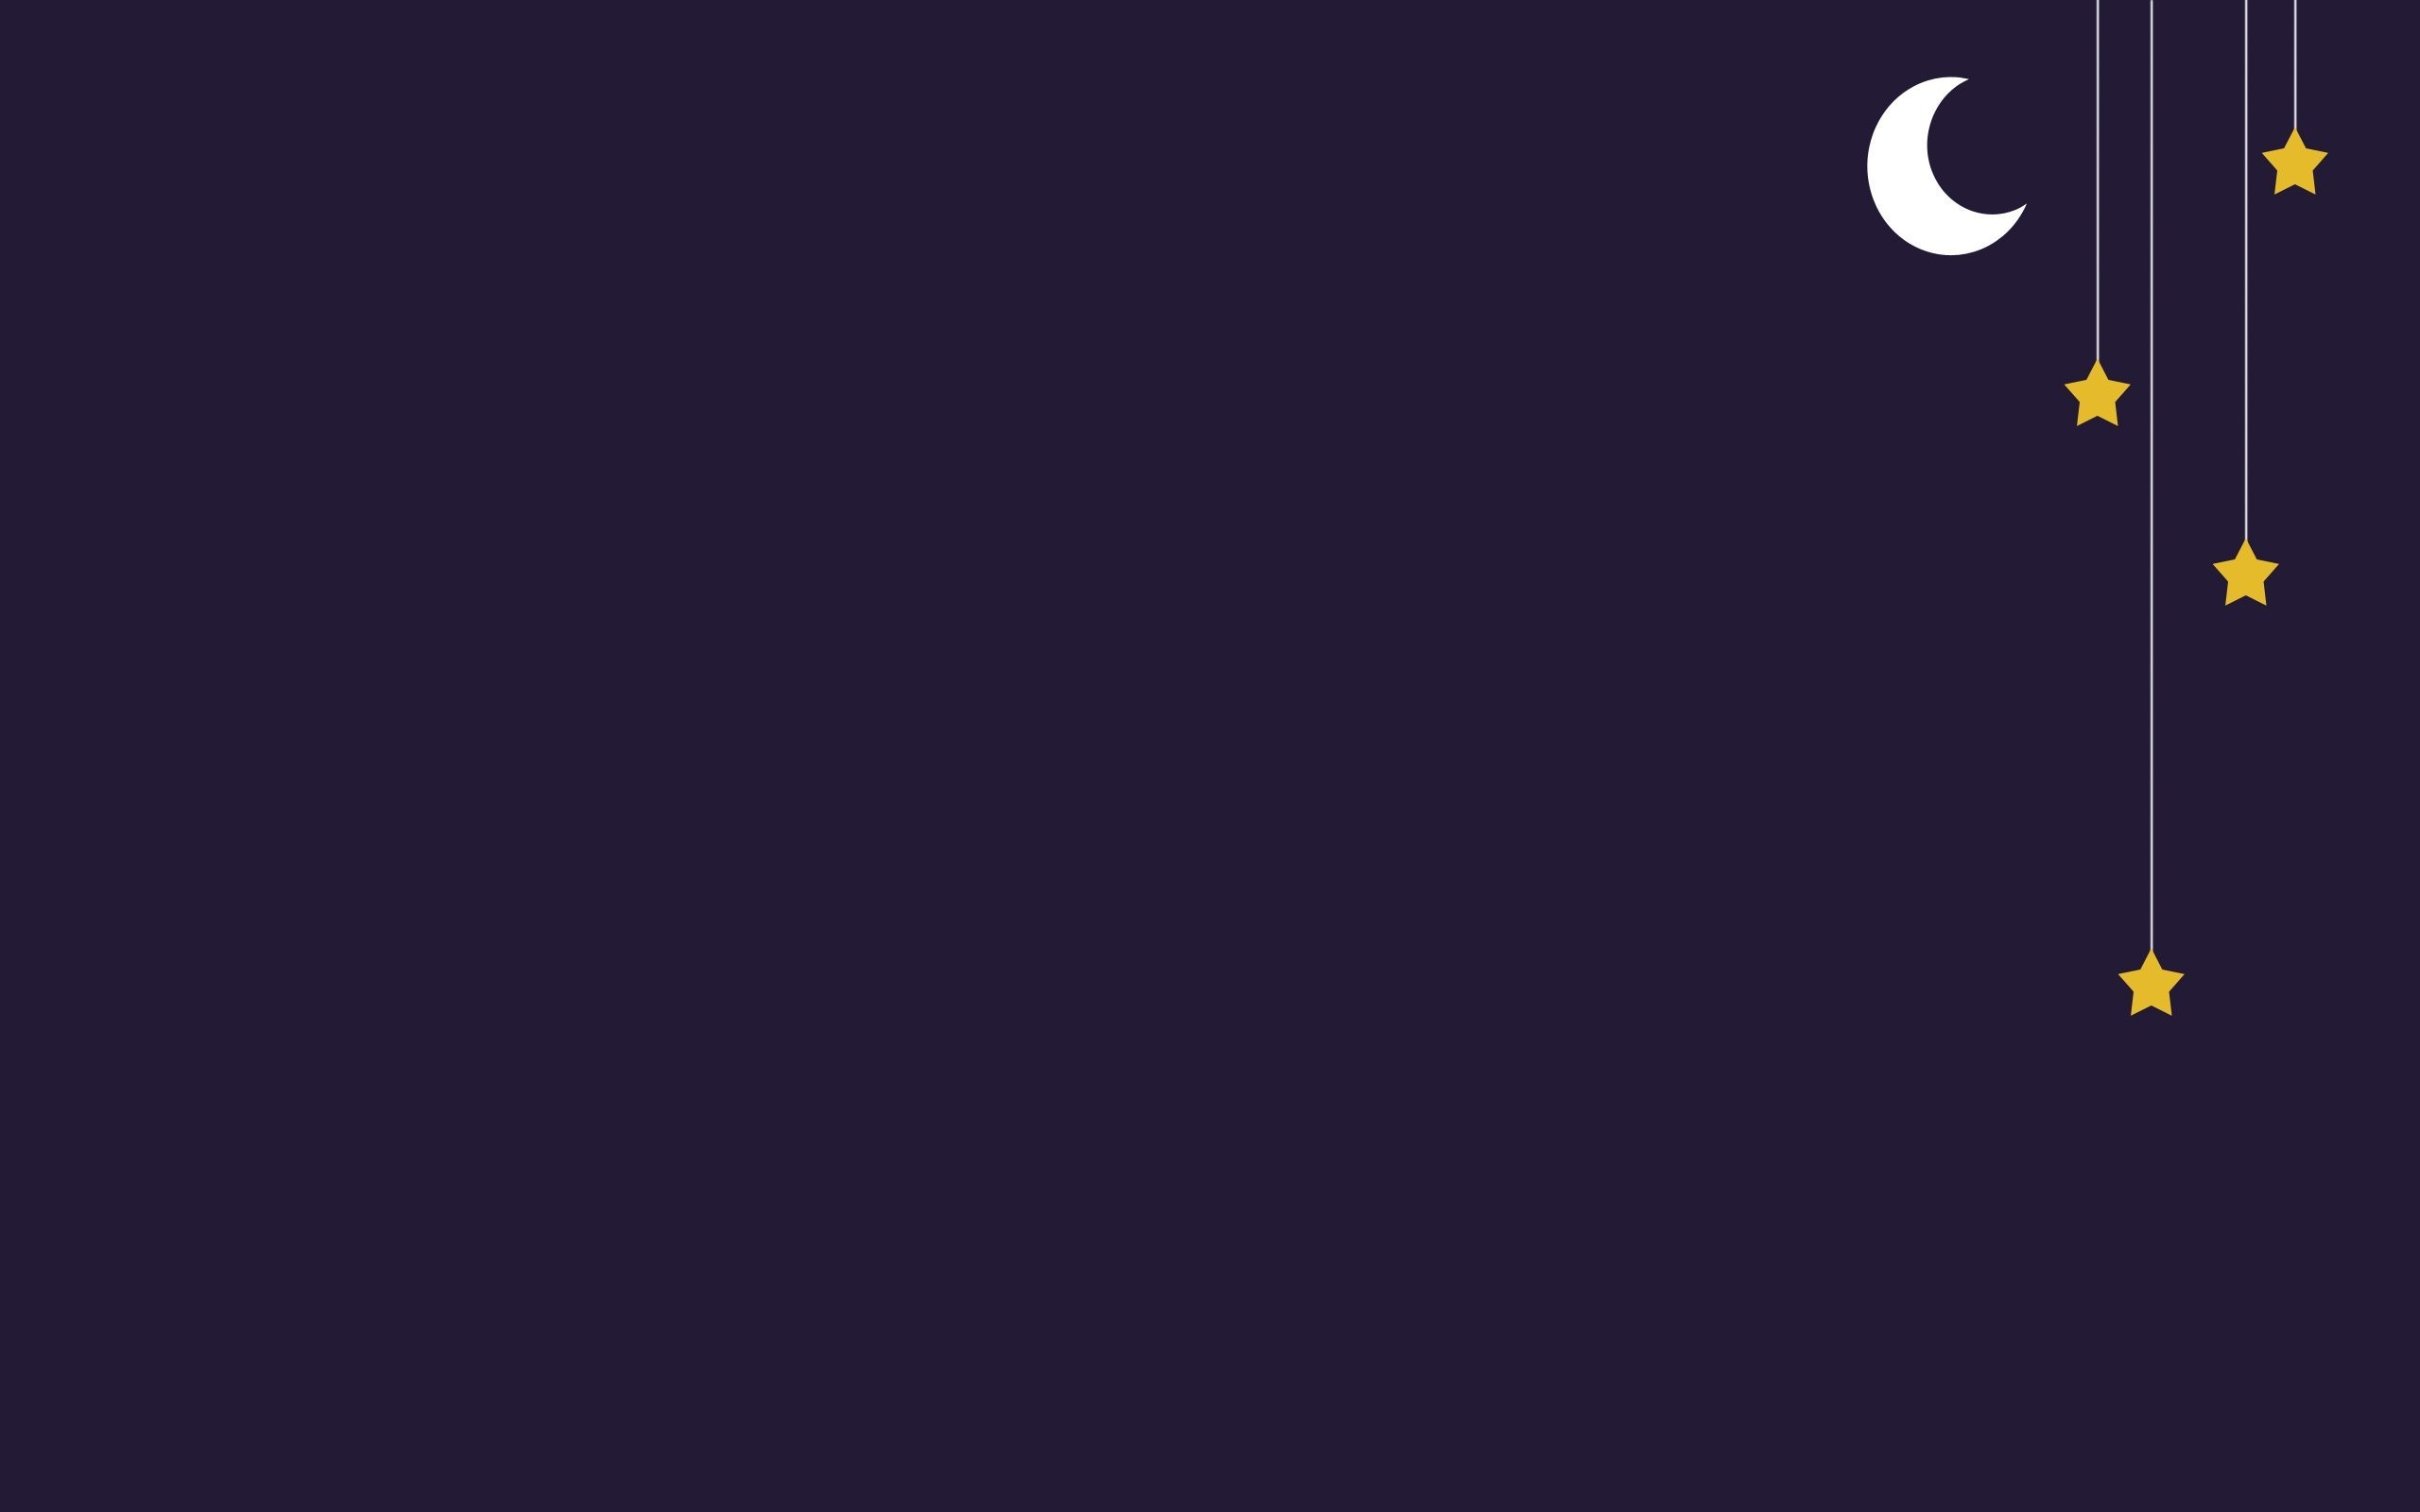 General 2560x1600 digital art minimalism simple background Moon stars lines ropes night purple background